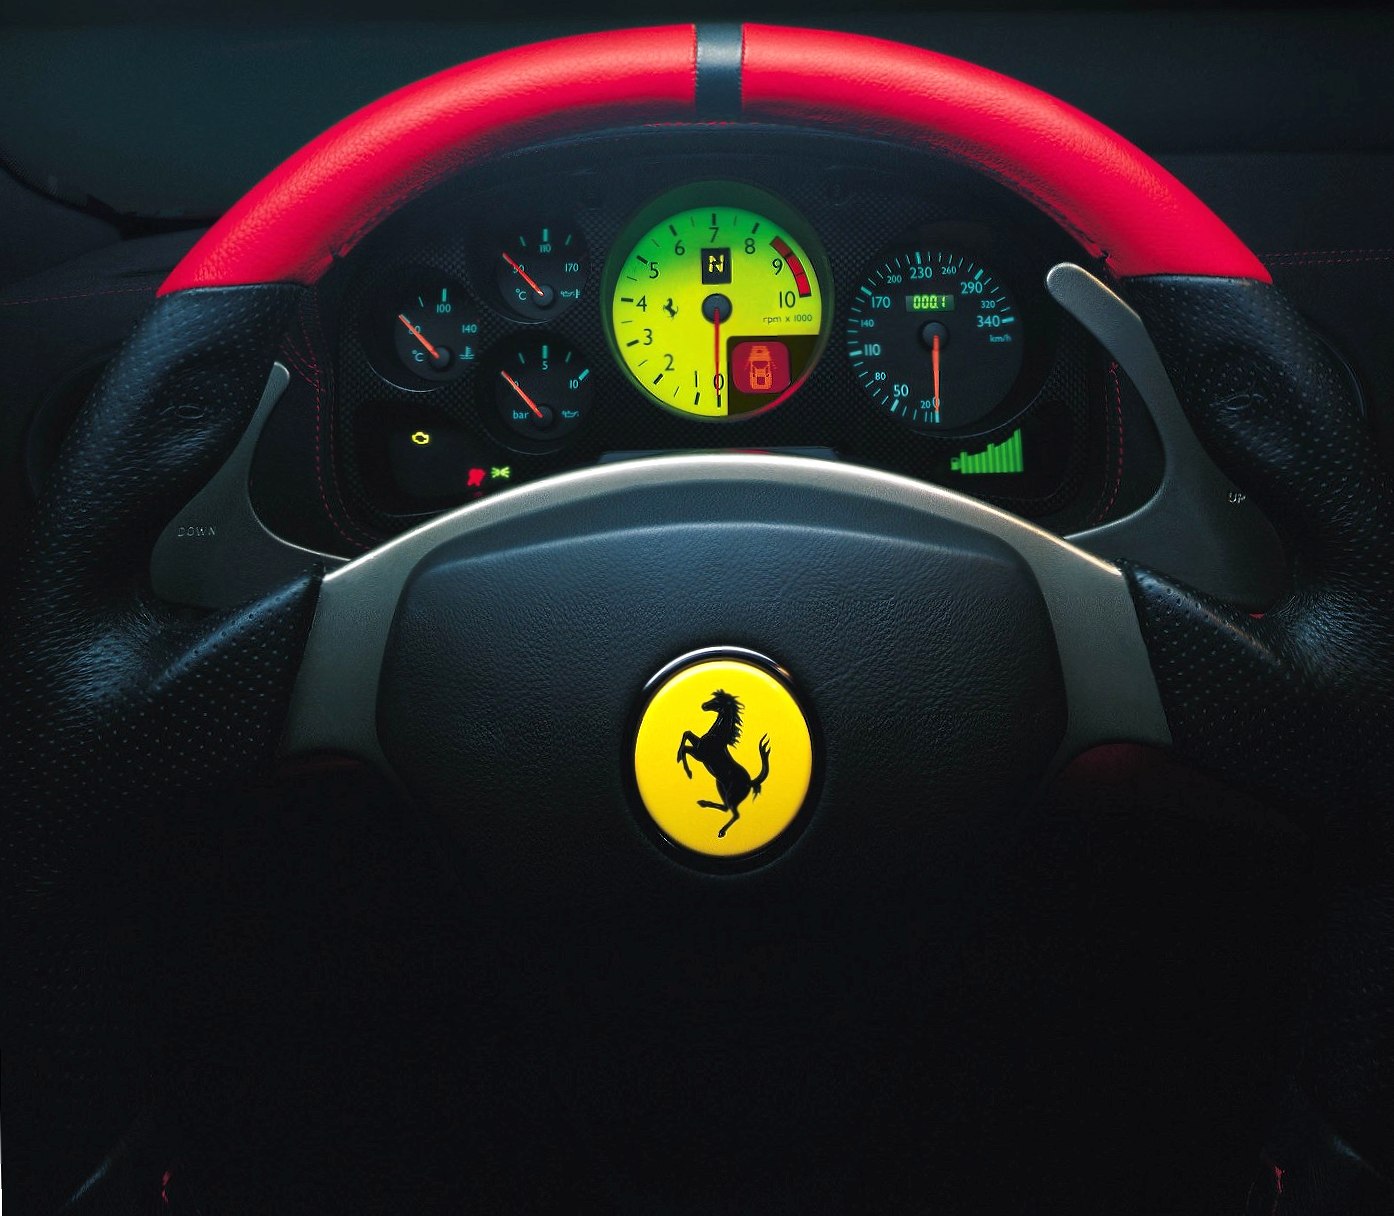 Ferrari HD at 1280 x 960 size wallpapers HD quality